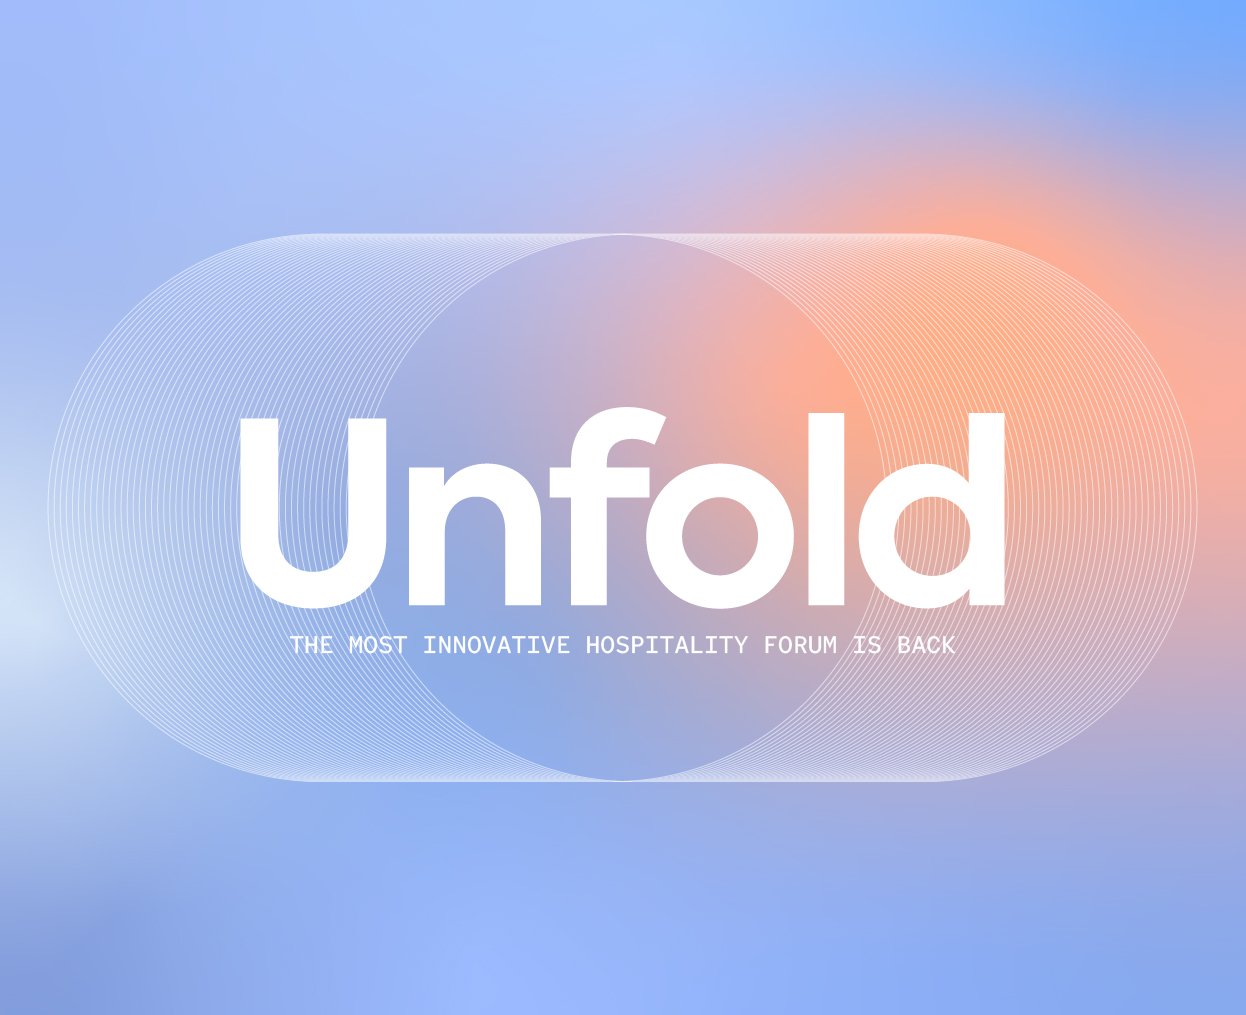 Unfold, the most innovative hospitality forum